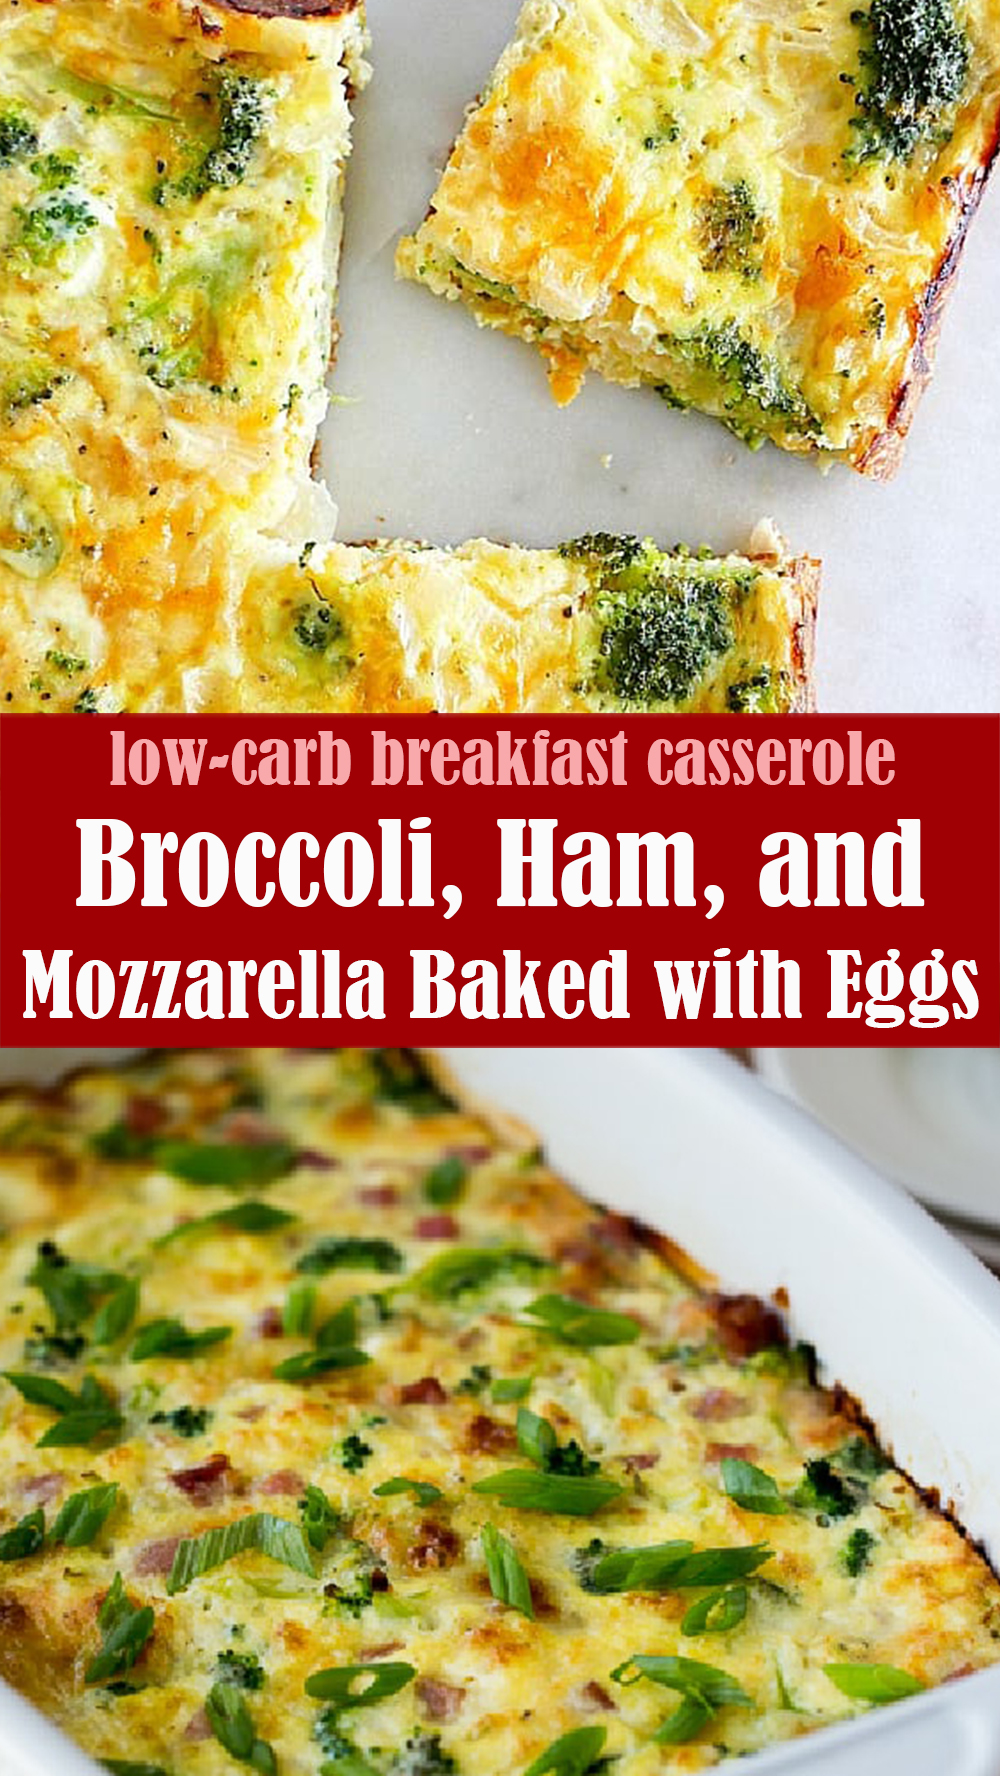 Broccoli, Ham, and Mozzarella Baked with Eggs